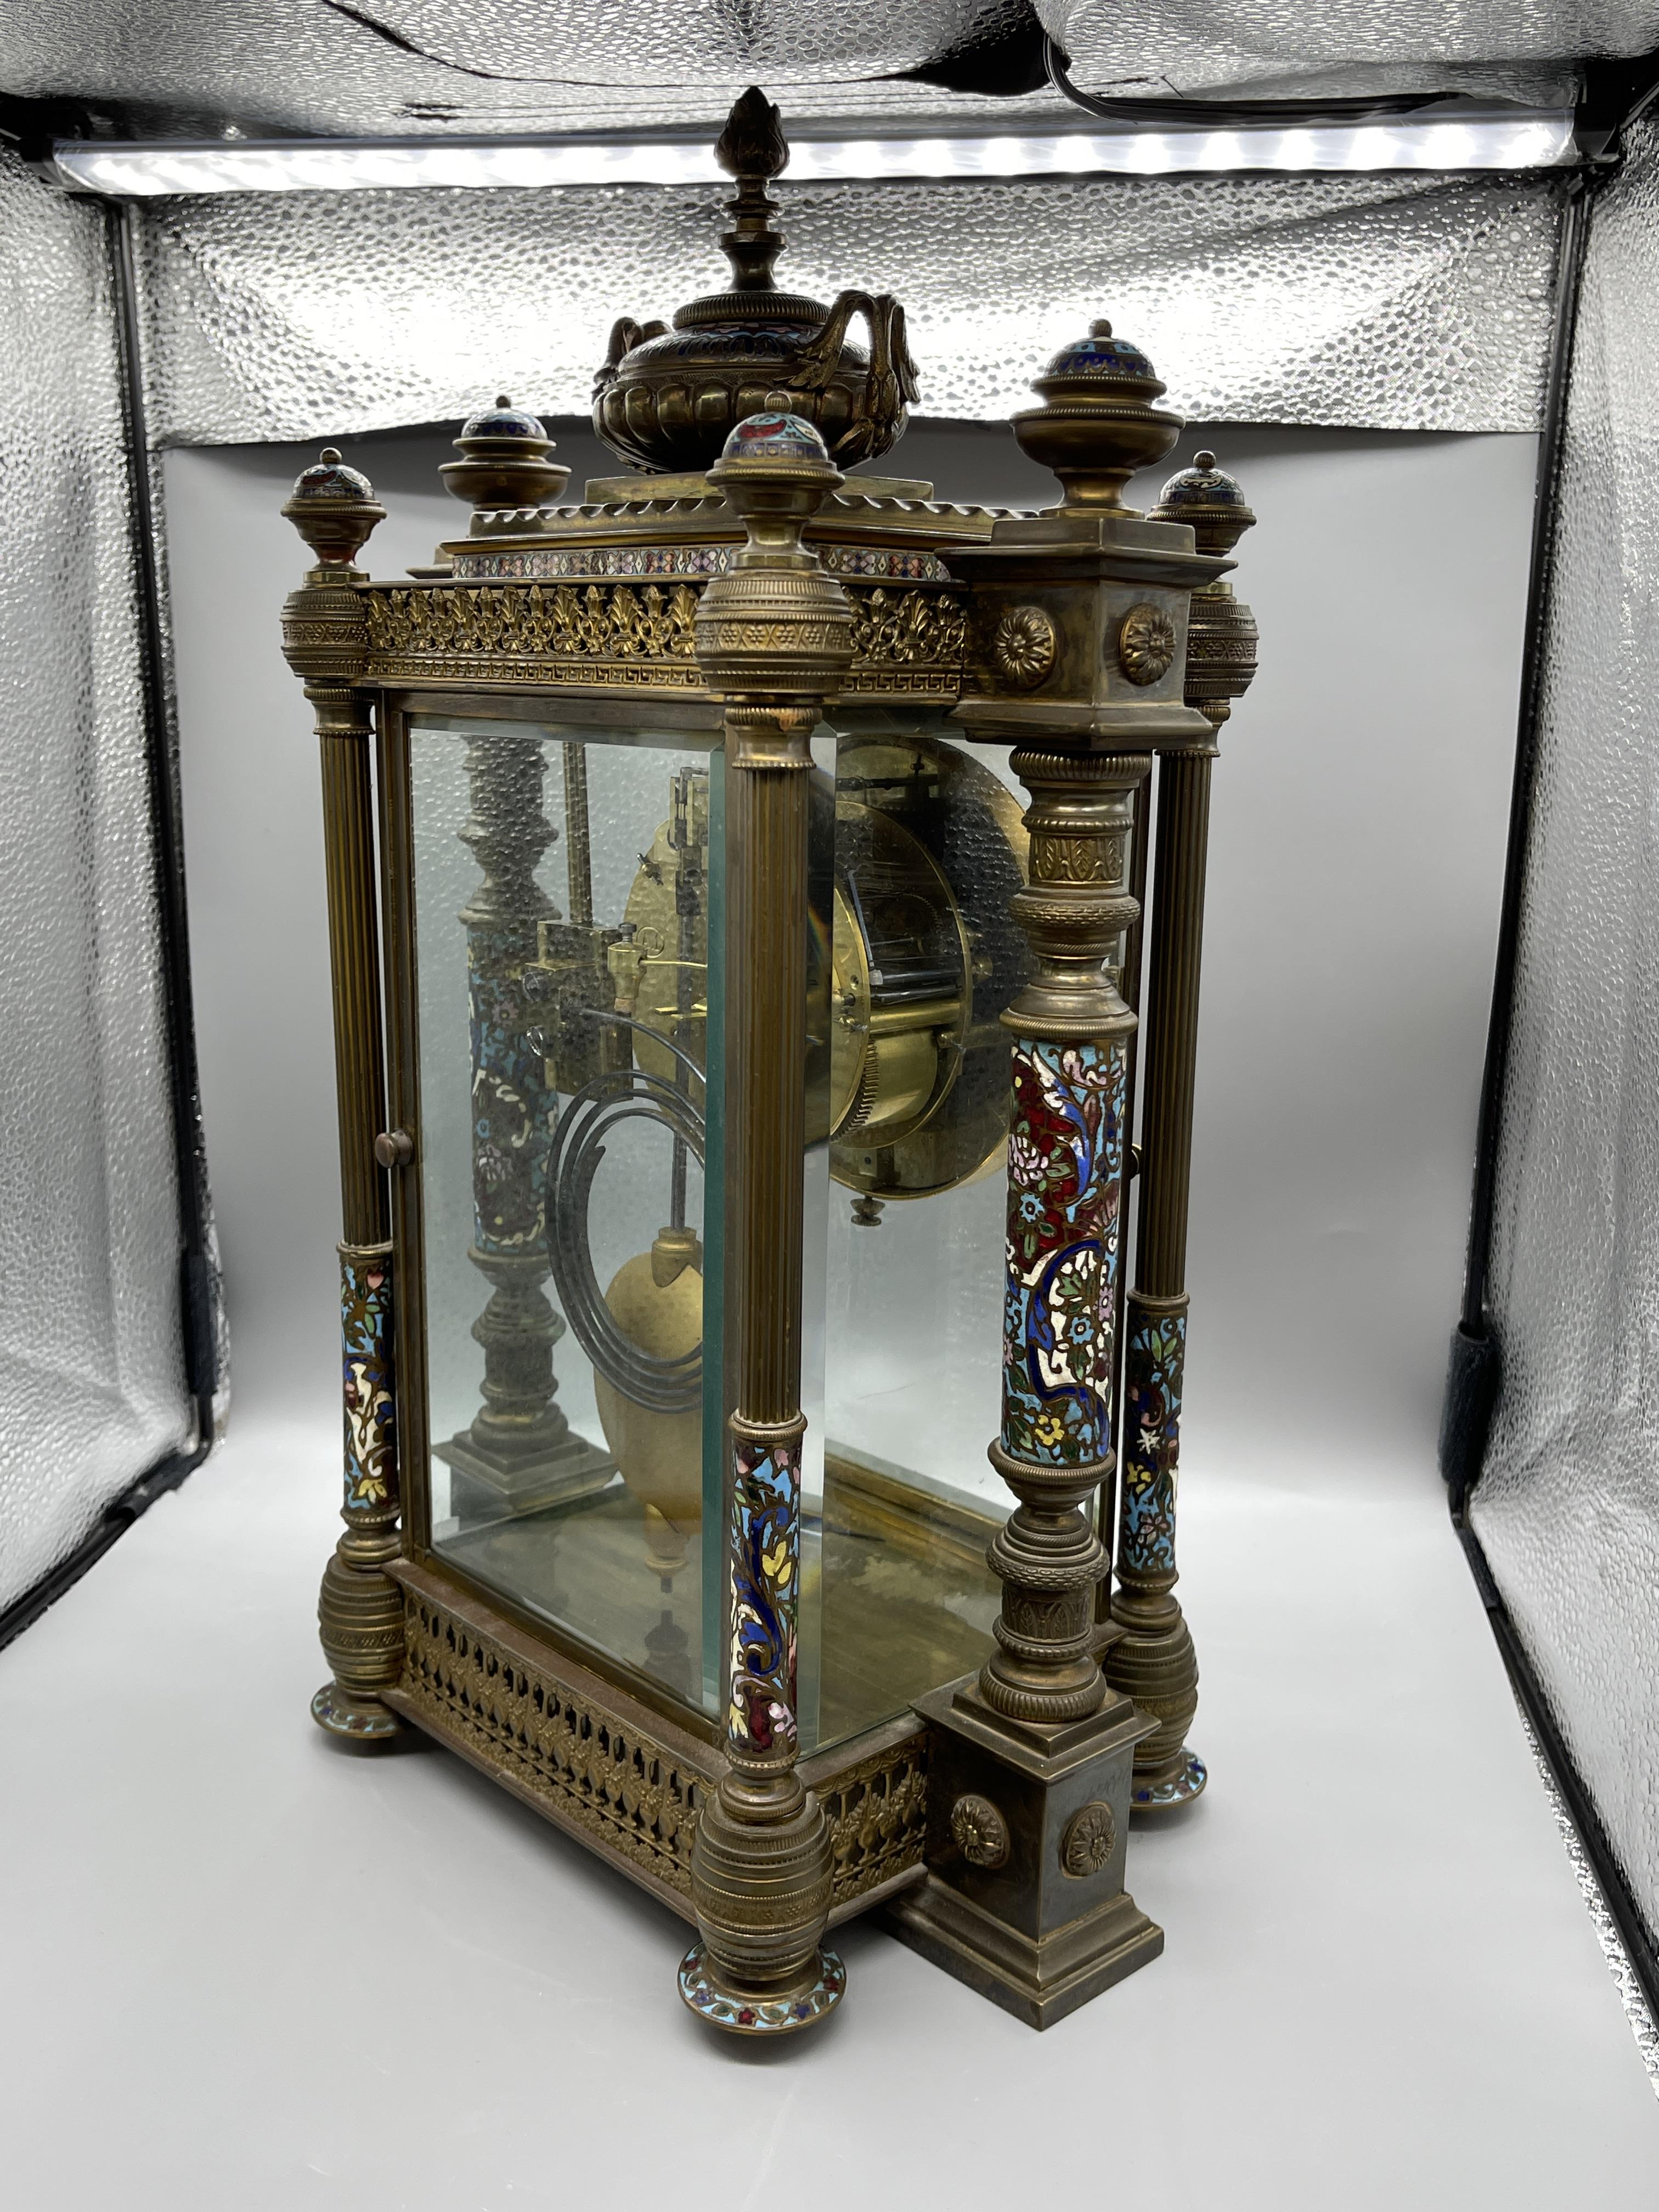 Enamel French Mantle Clock - Image 9 of 23